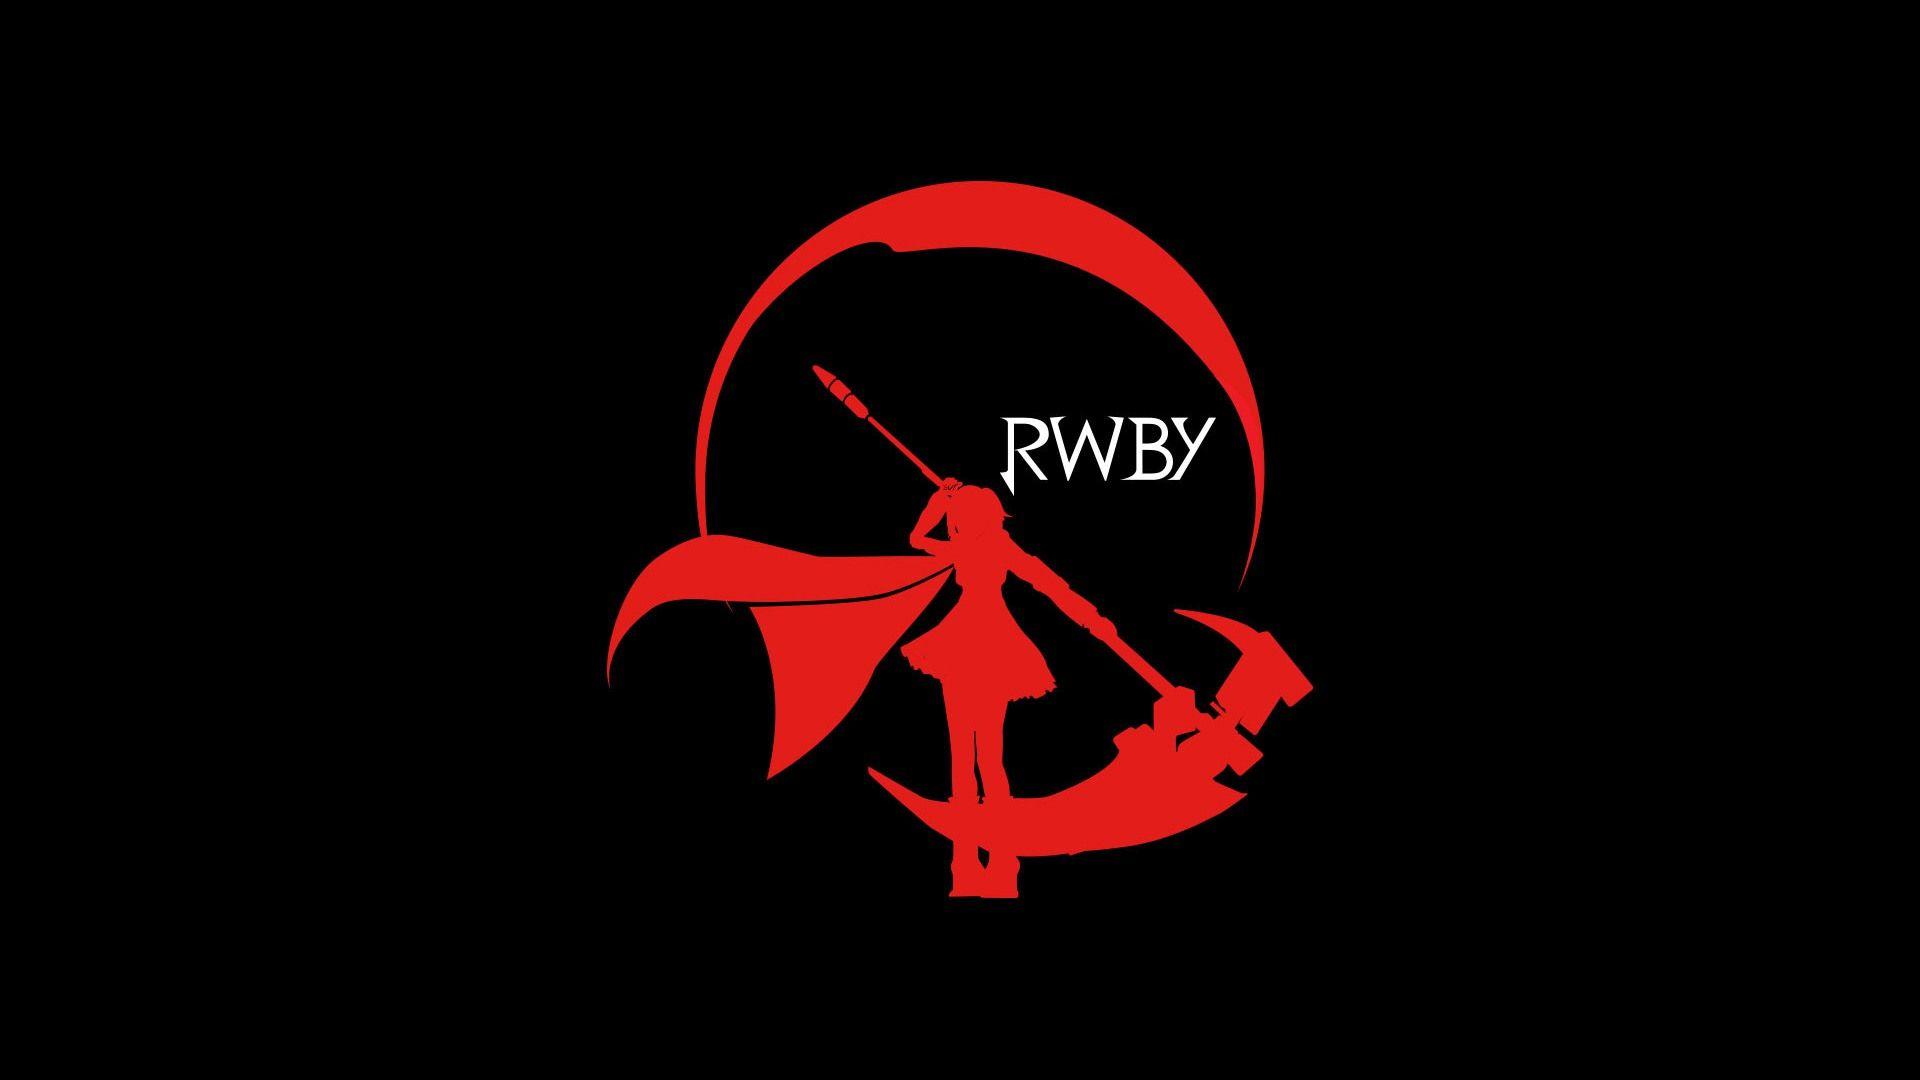 RWBY Ruby Scythe Moon Logo Logo Wallpaper